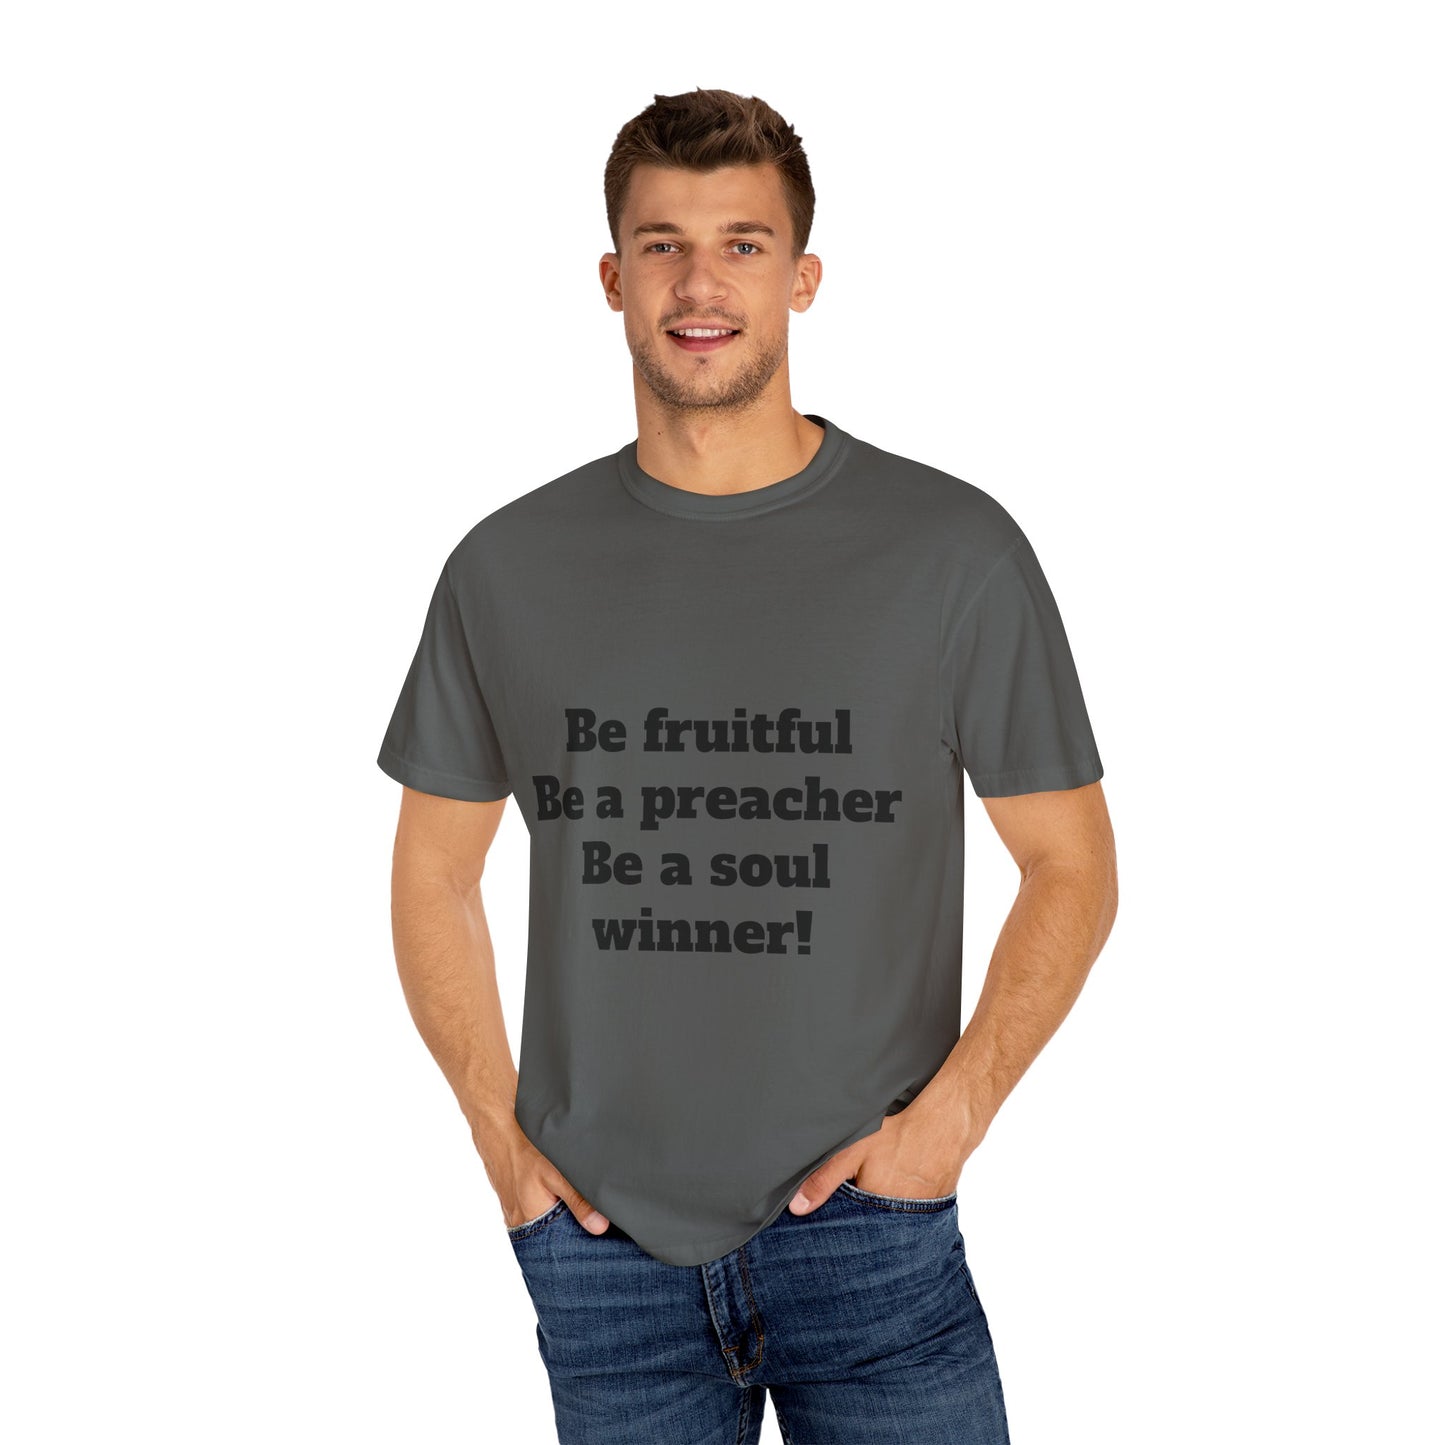 Be a soul winner! T-shirt